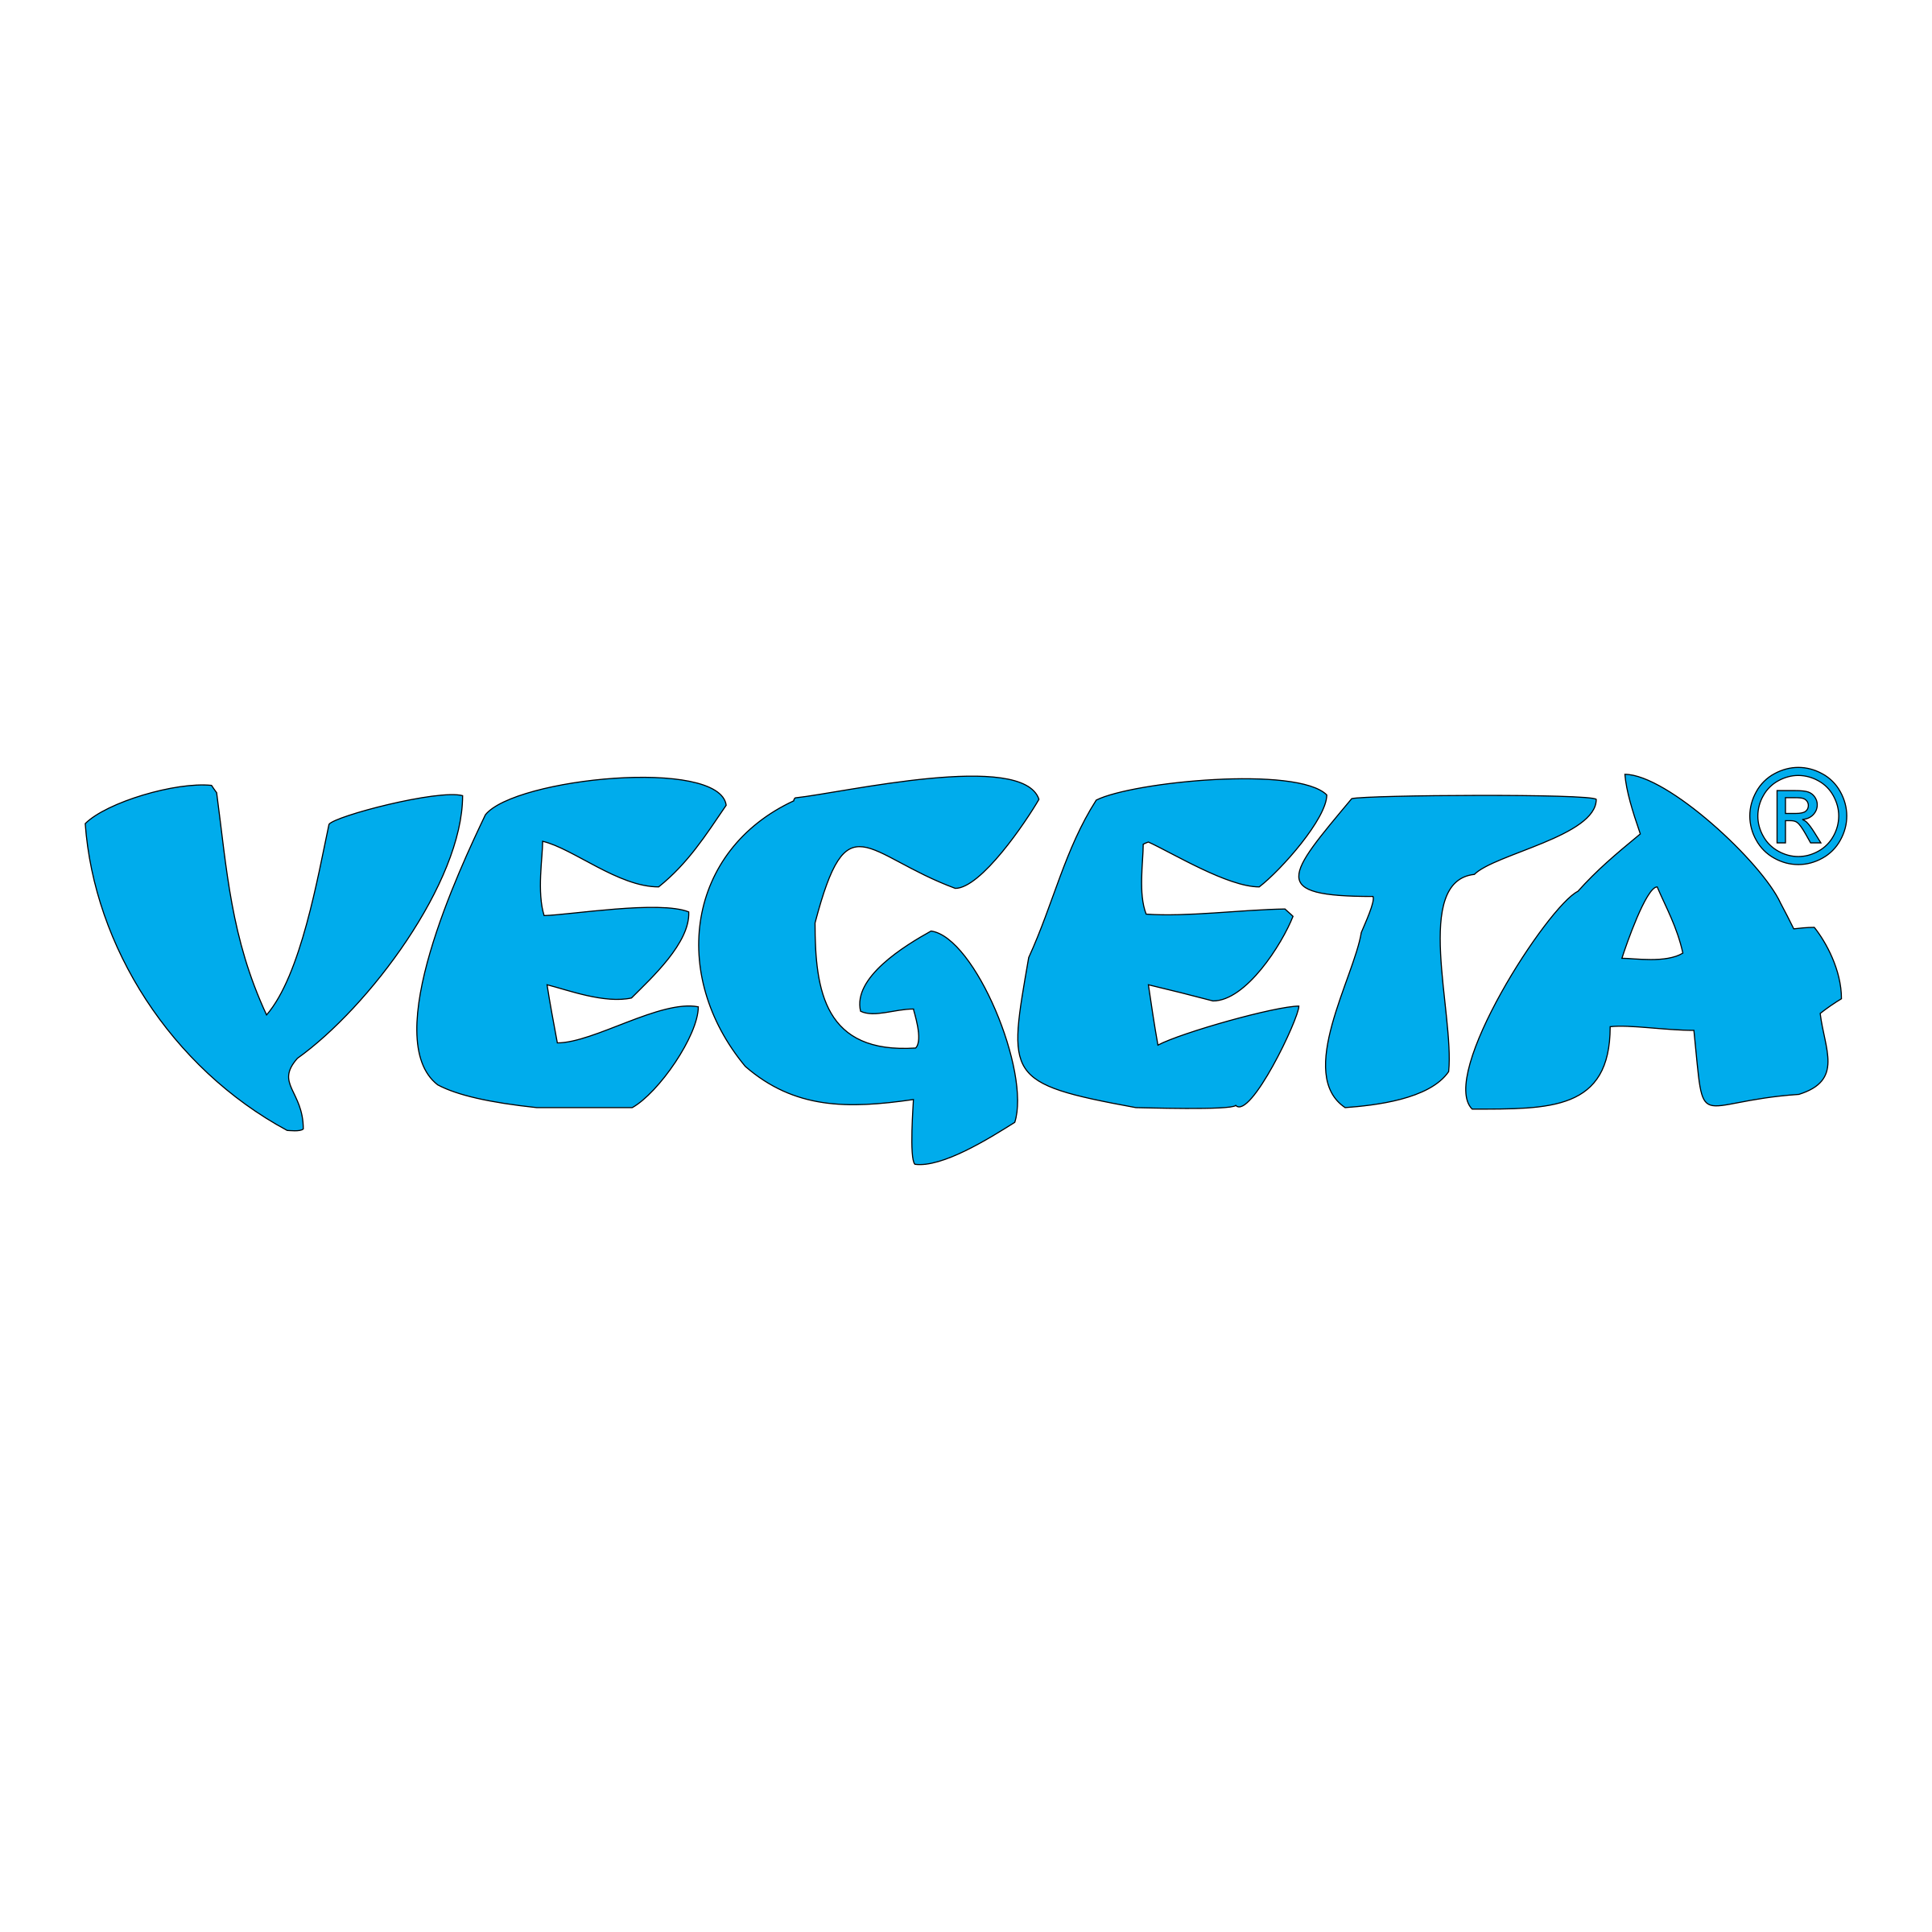 Vegeta Logo - Vegeta Logo PNG Transparent & SVG Vector - Freebie Supply